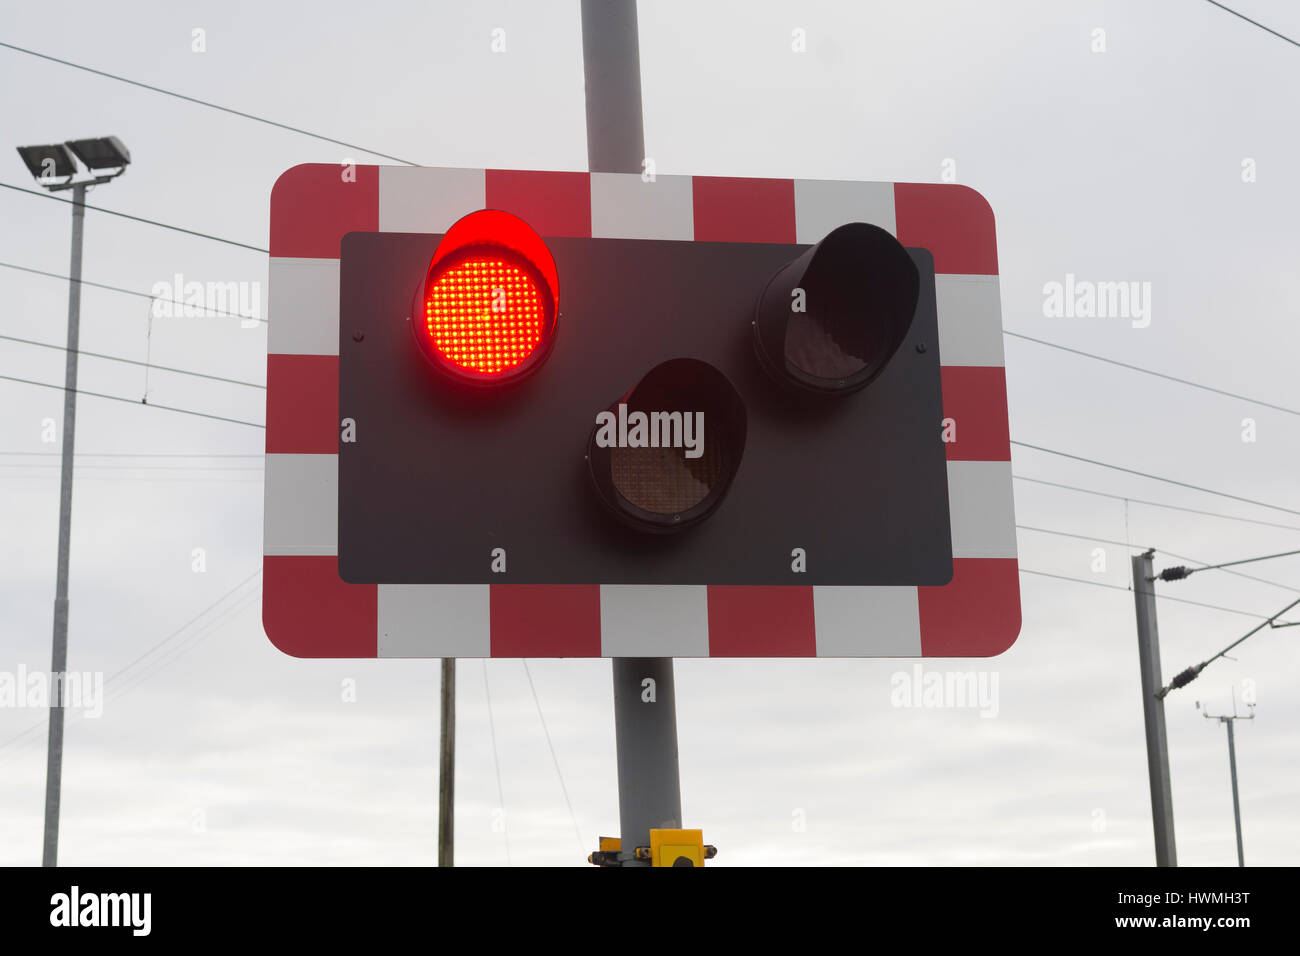 Level crossing warning lights Stock Photo